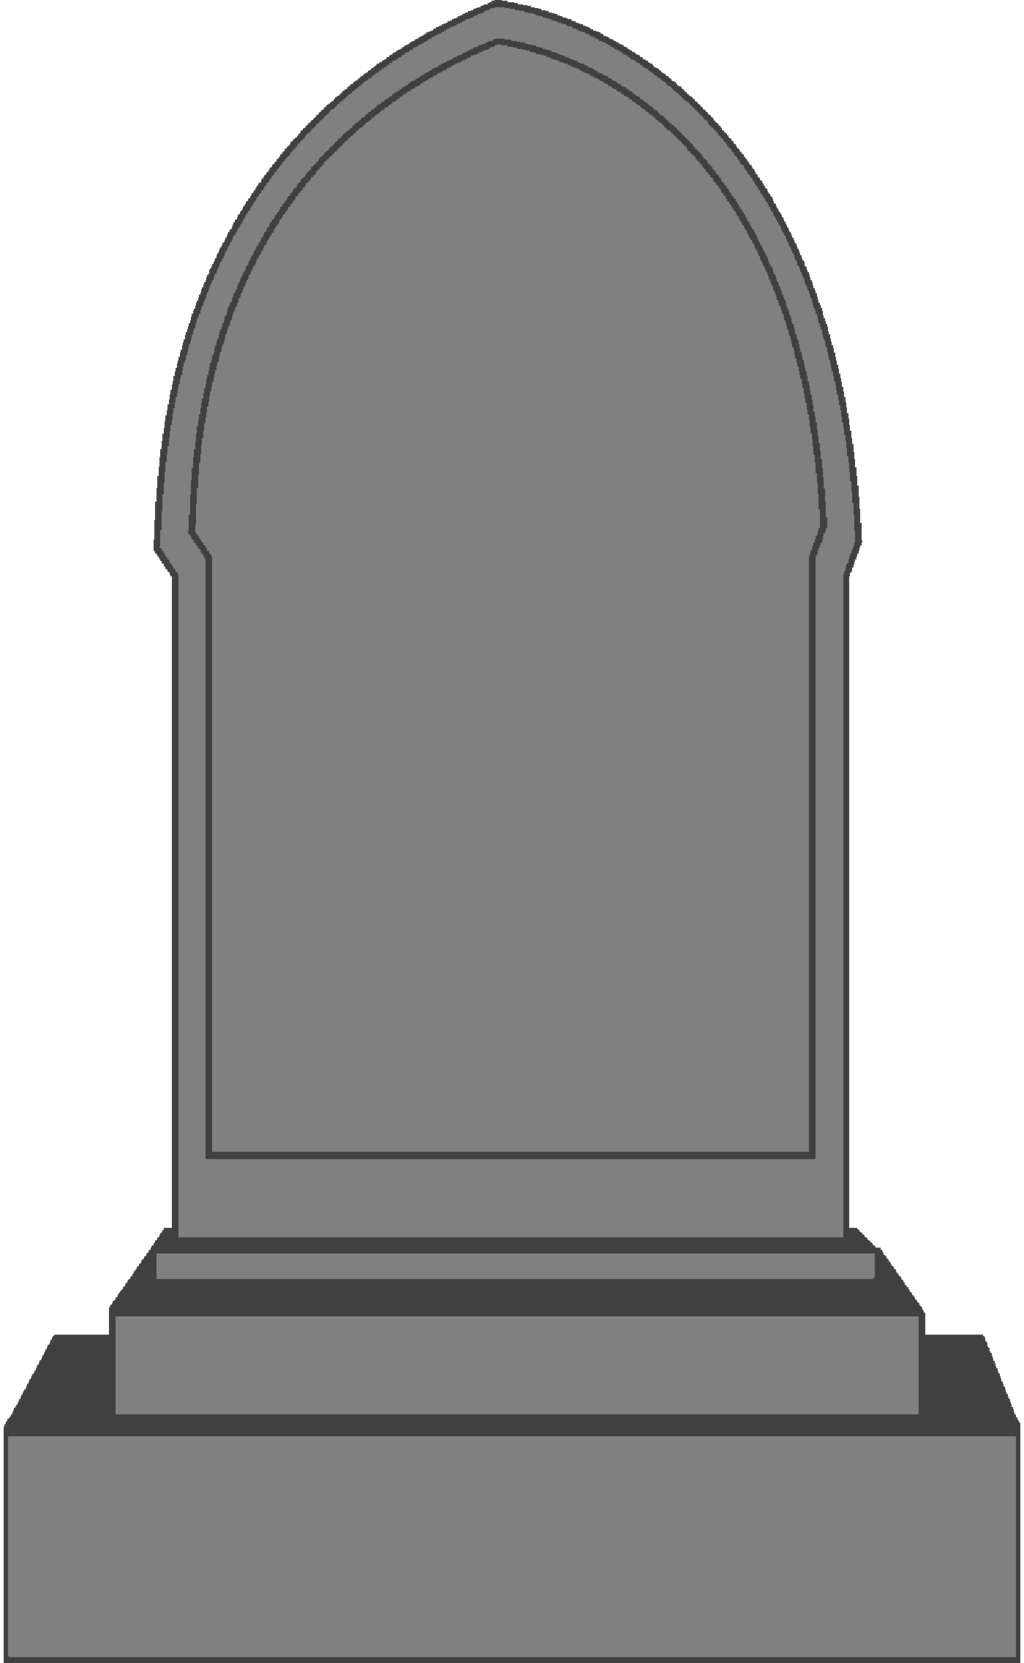 Headstone stone slab